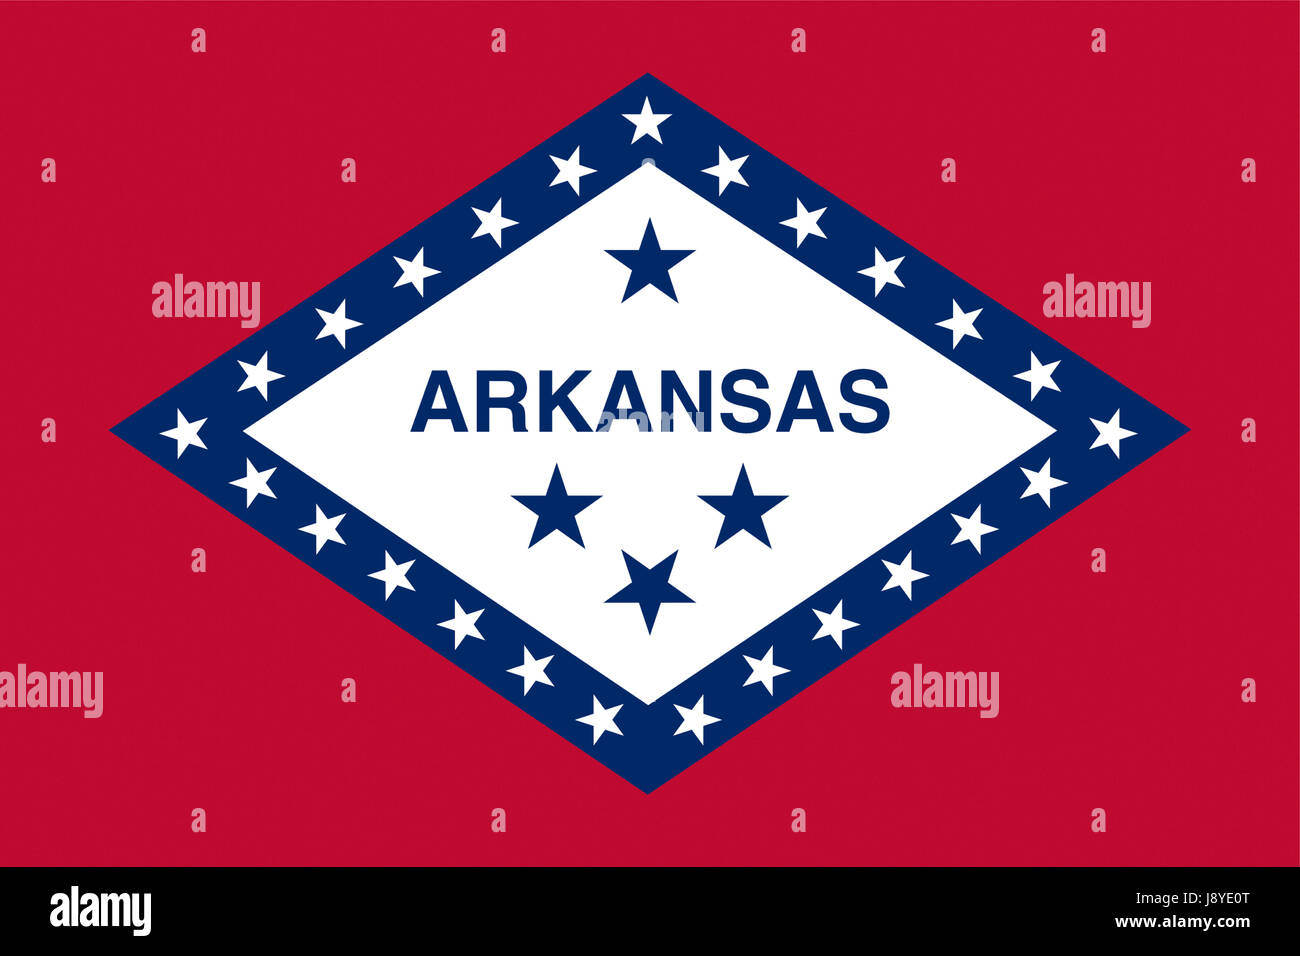 Illustration of the flag of Arkansas state in America Stock Photo